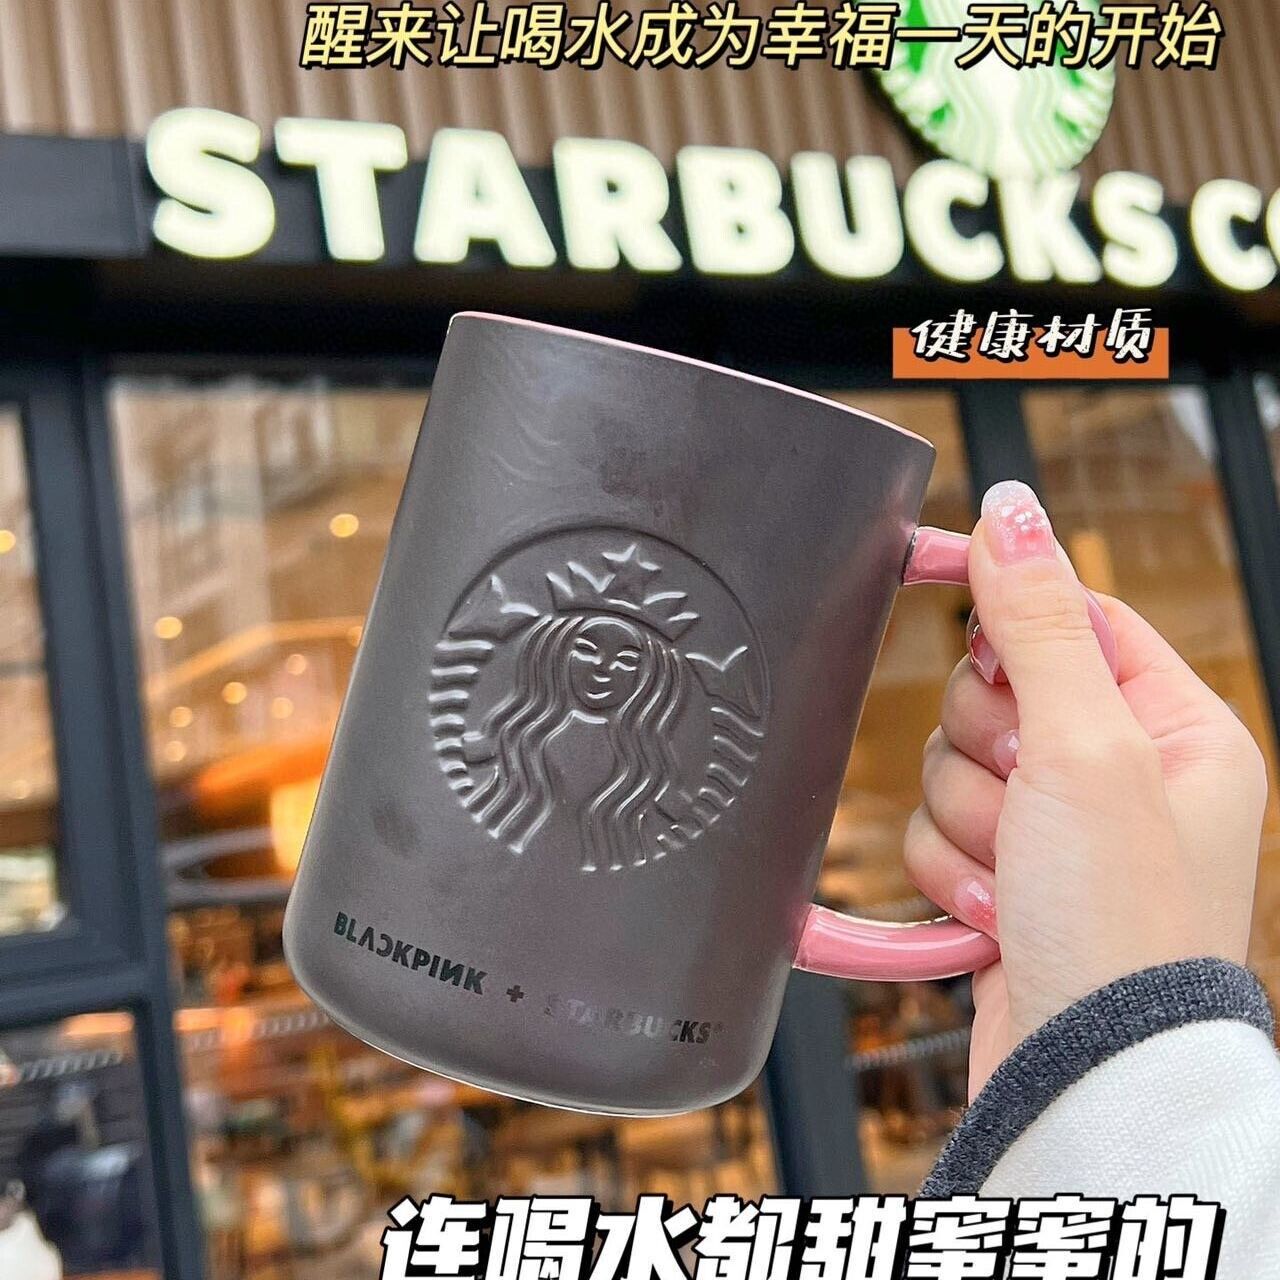 2023 New Starbucks Blackpink Thailand Coffee Mug Ceramic Cup Christmas Gift 12oz